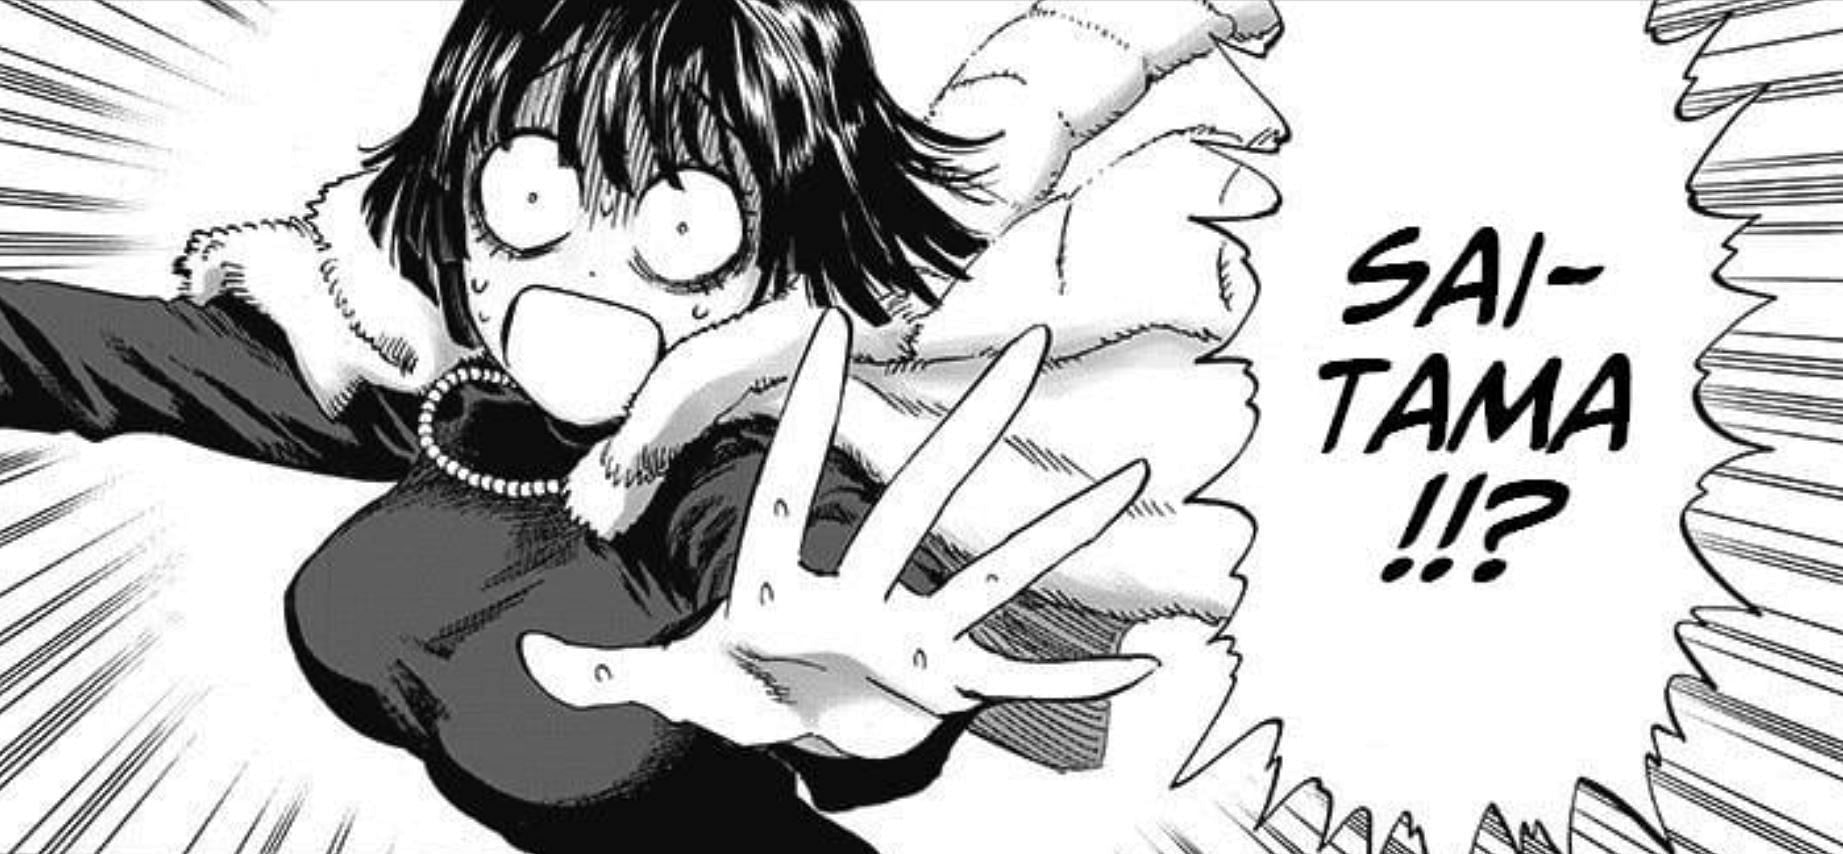 Fubuki as Saitama had fallen into the Demon-Level Monster Containment Room (Image via Shueisha)